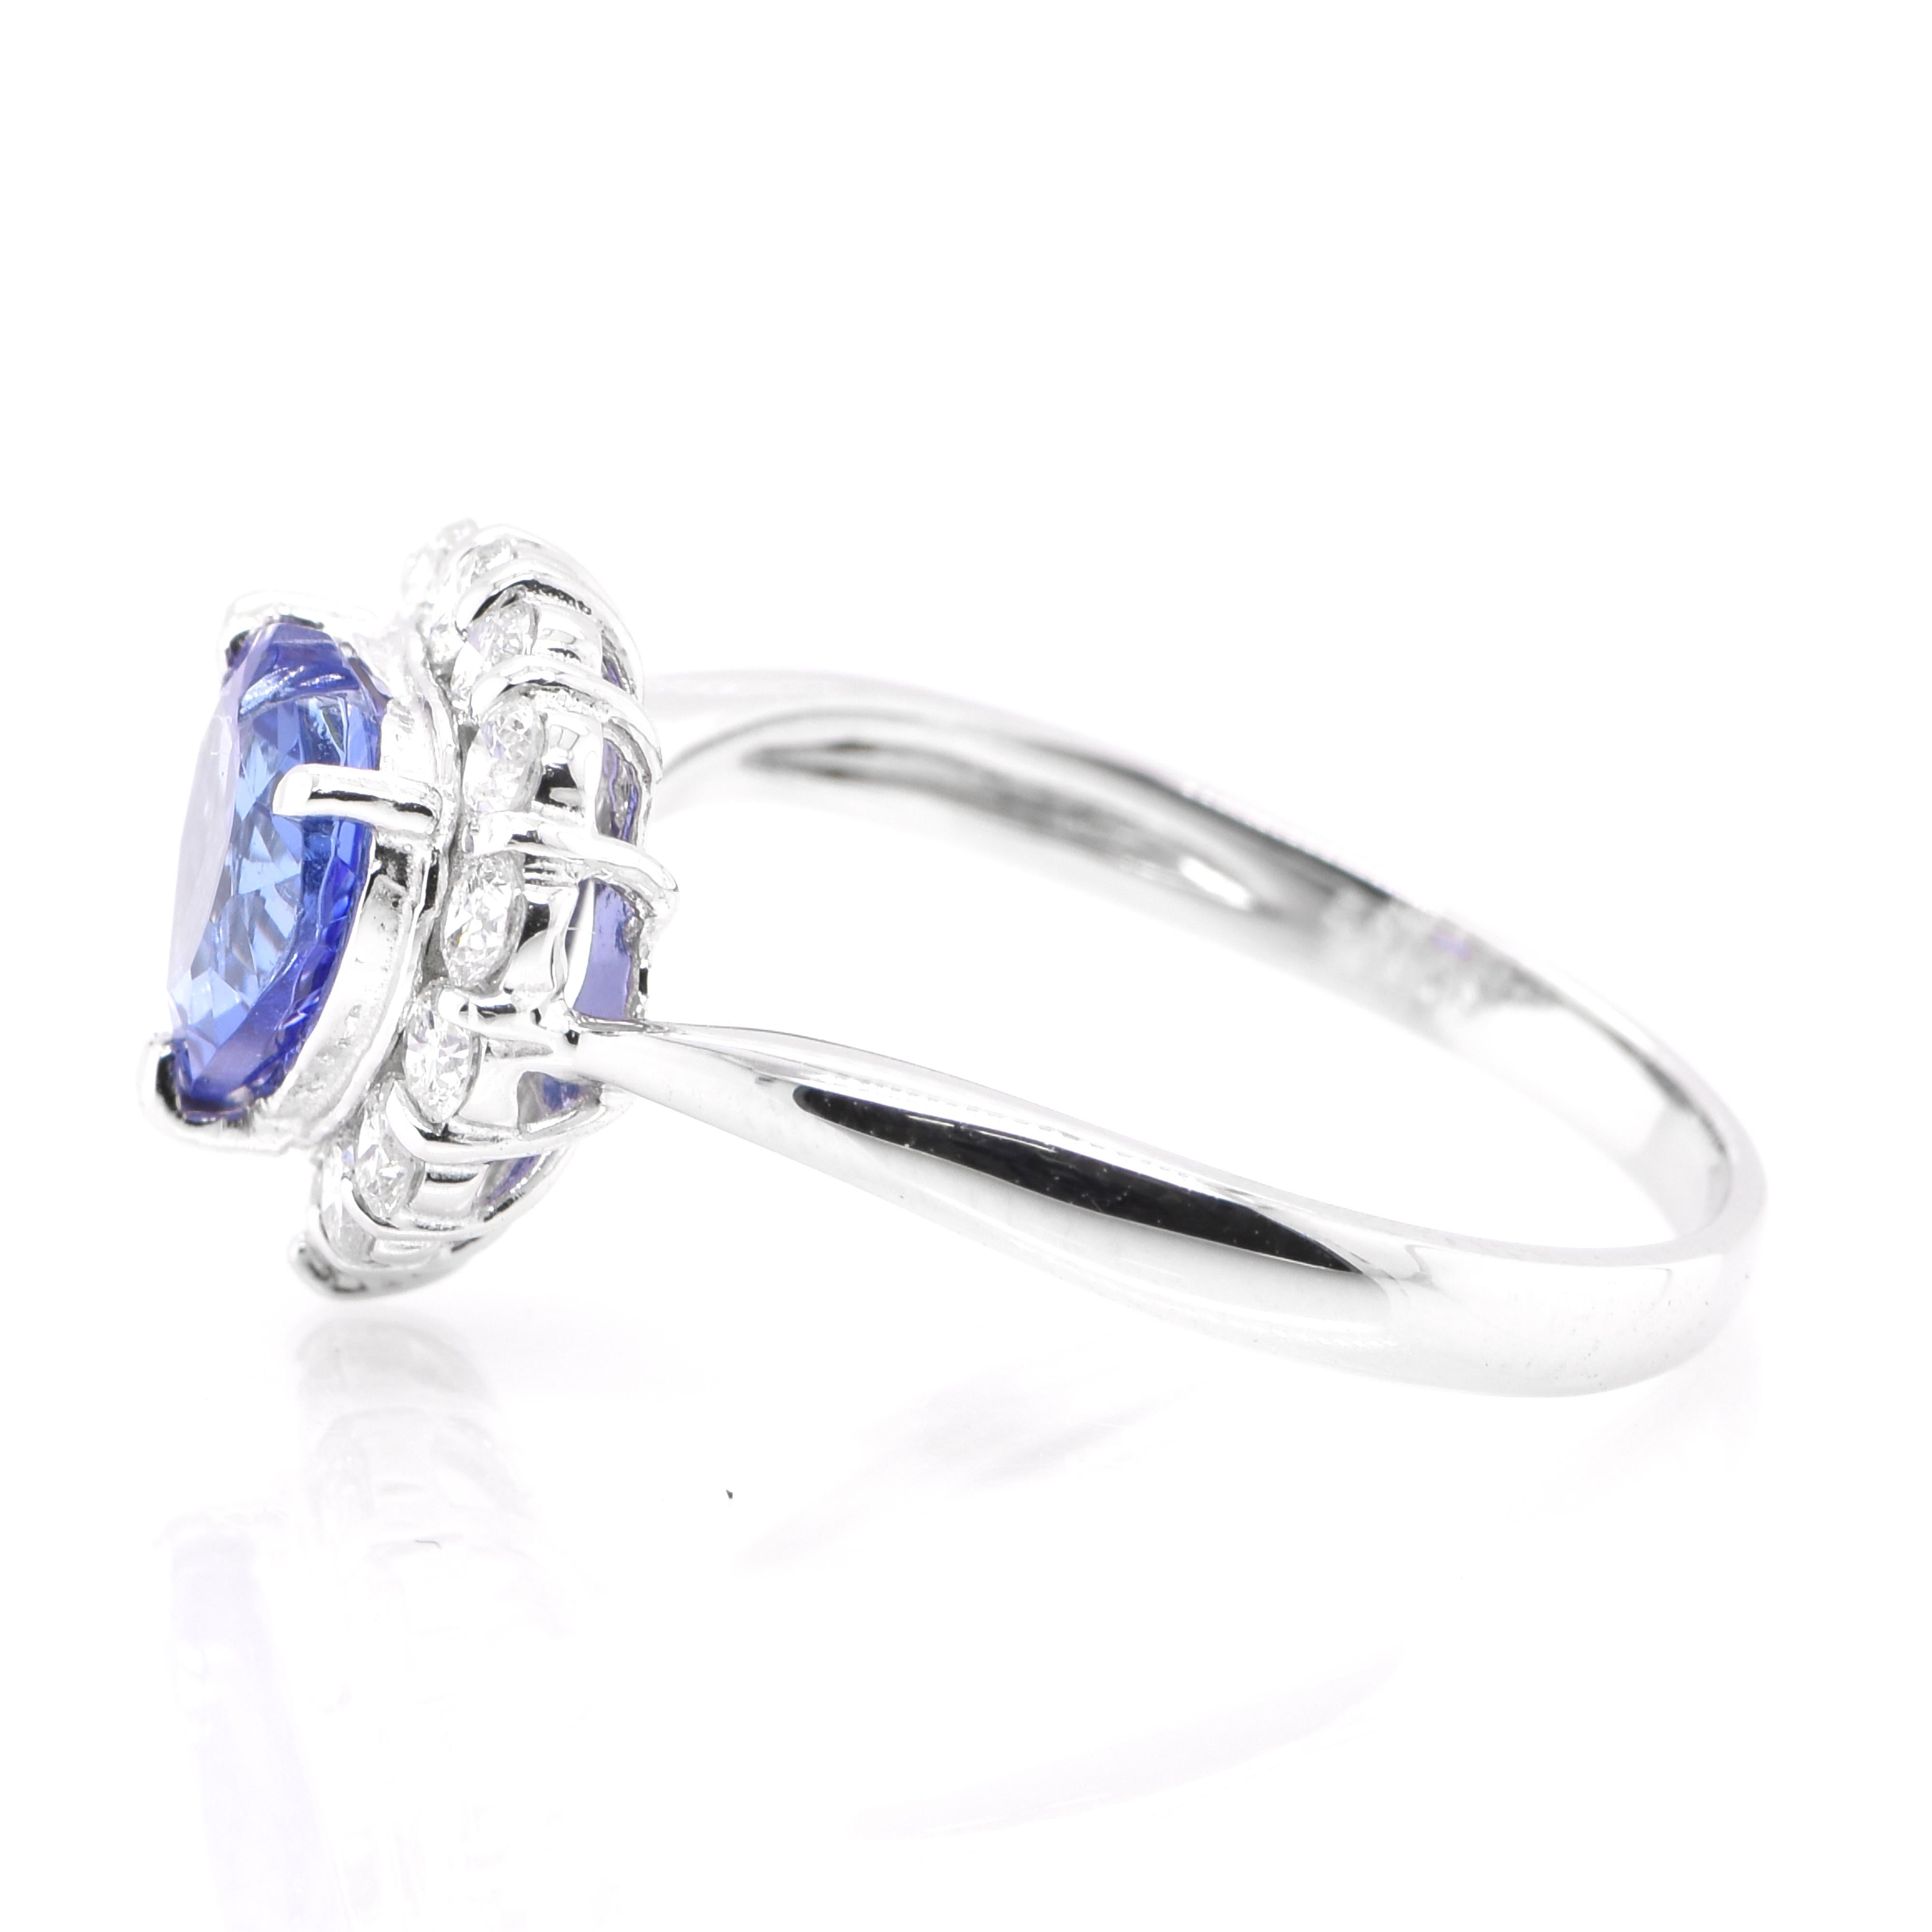 Modern 1.18 Carat Natural Heart Cut Tanzanite & Diamond Engagement Ring Set in Platinum